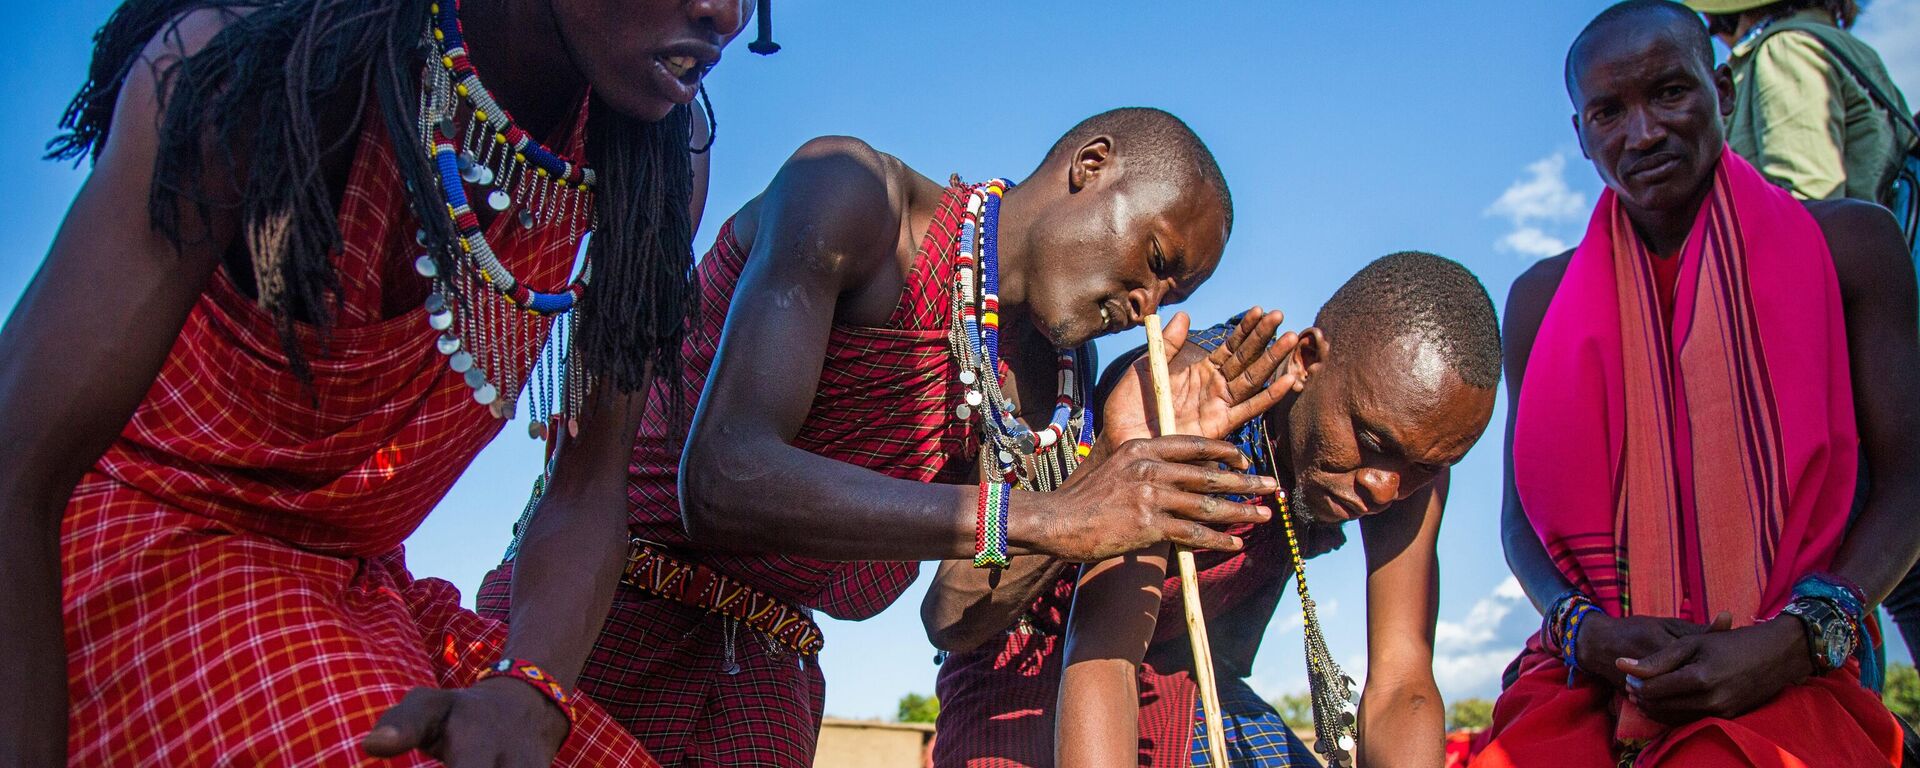 Masajų genties vyrai kūrena ugnį Kenijoje - Sputnik Lietuva, 1920, 31.07.2021